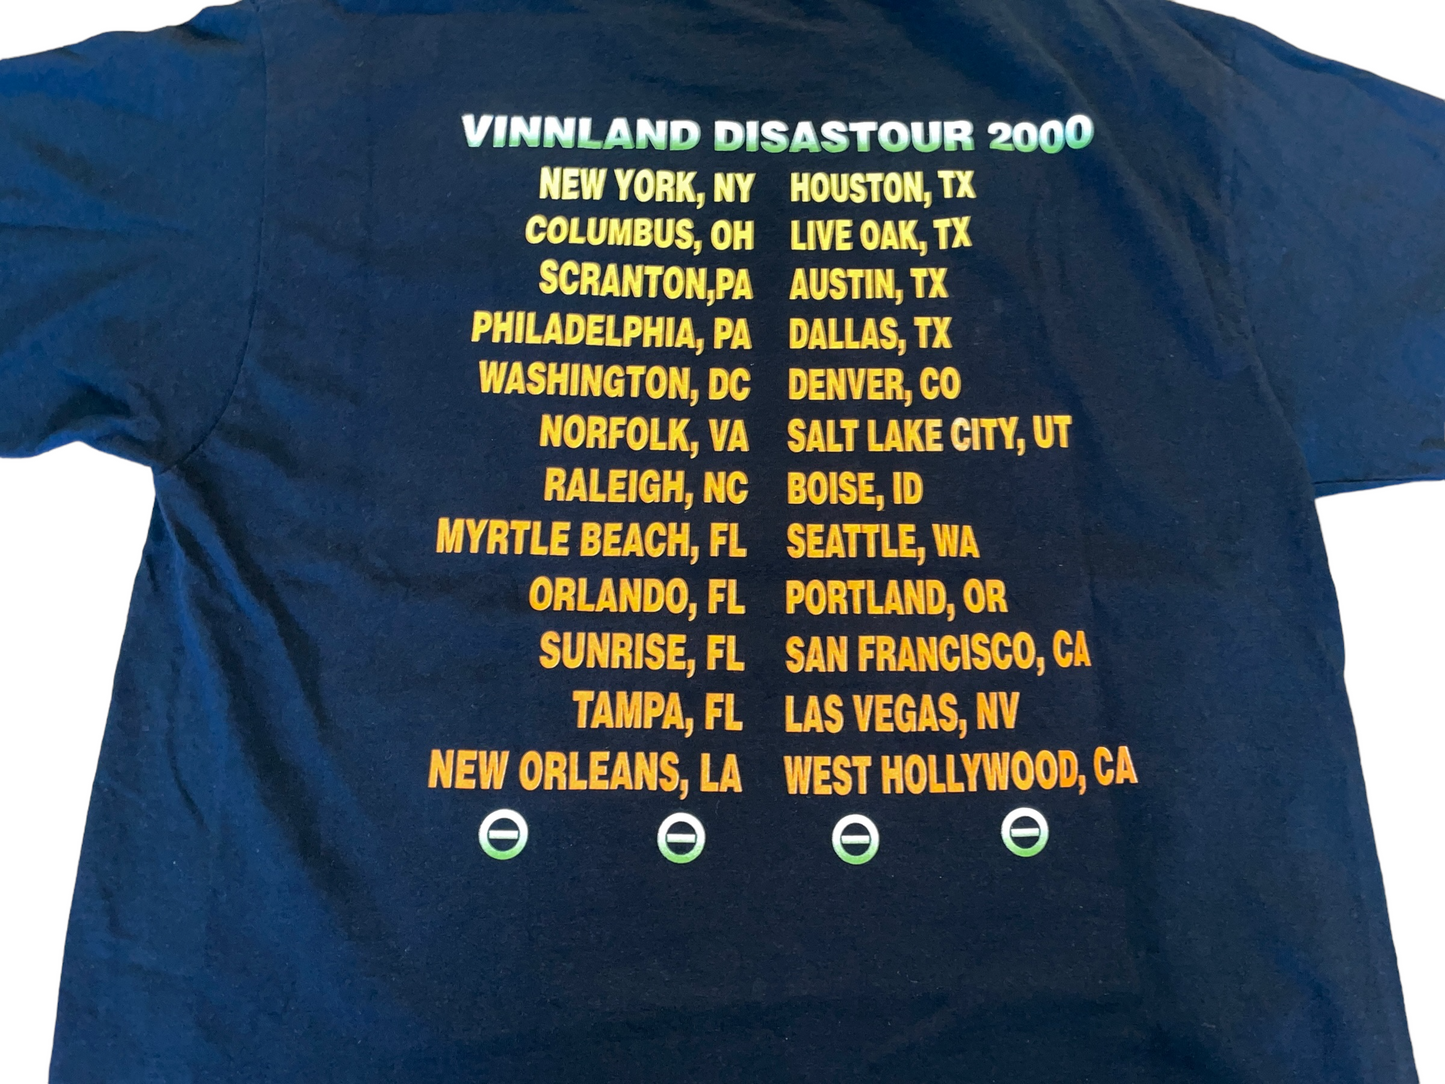 Vintage 2000 Type O Negative T-Shirt